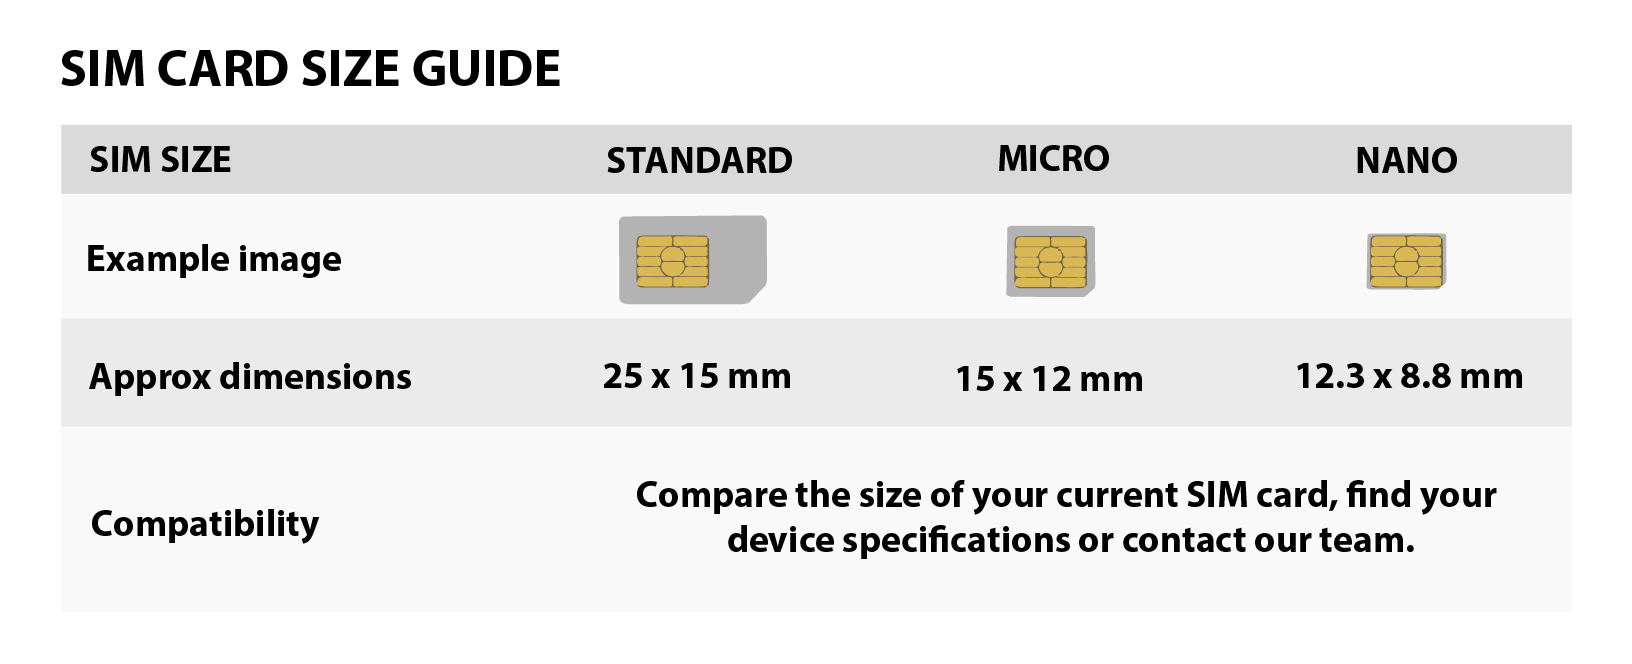 SIM card size